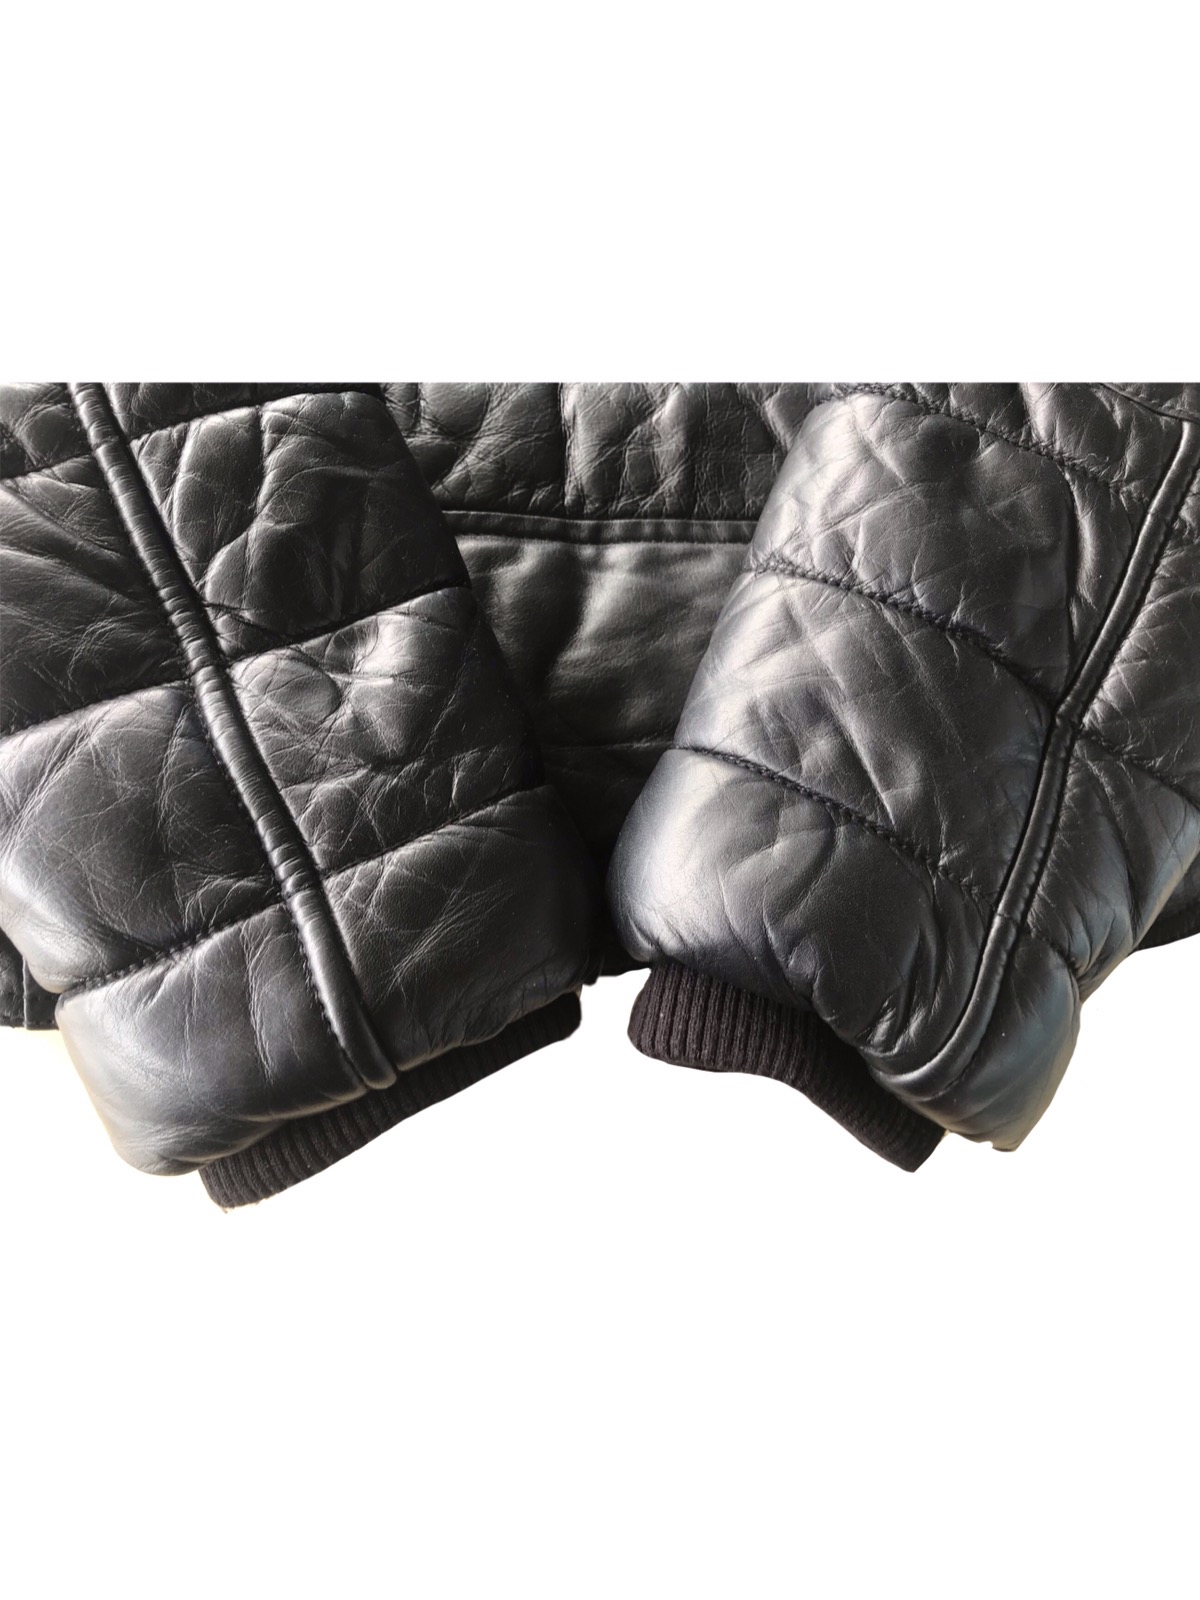 Rare Alexander Wang x H&M Padded Leather Biker Jacket - 11